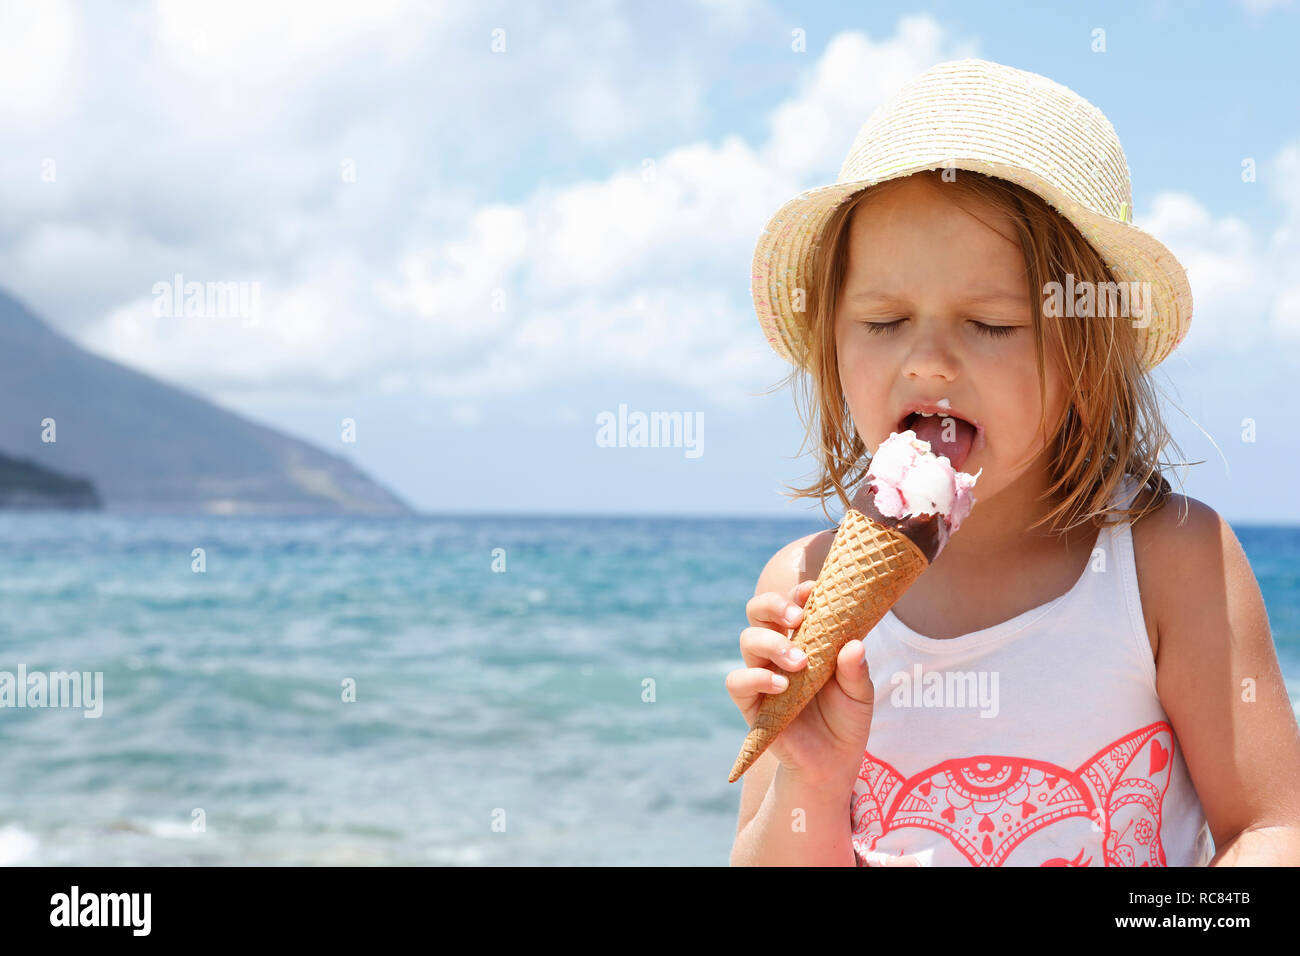 Girl eating ice cream cone on beach, Scopello, Sicily, Italy Stock Photo